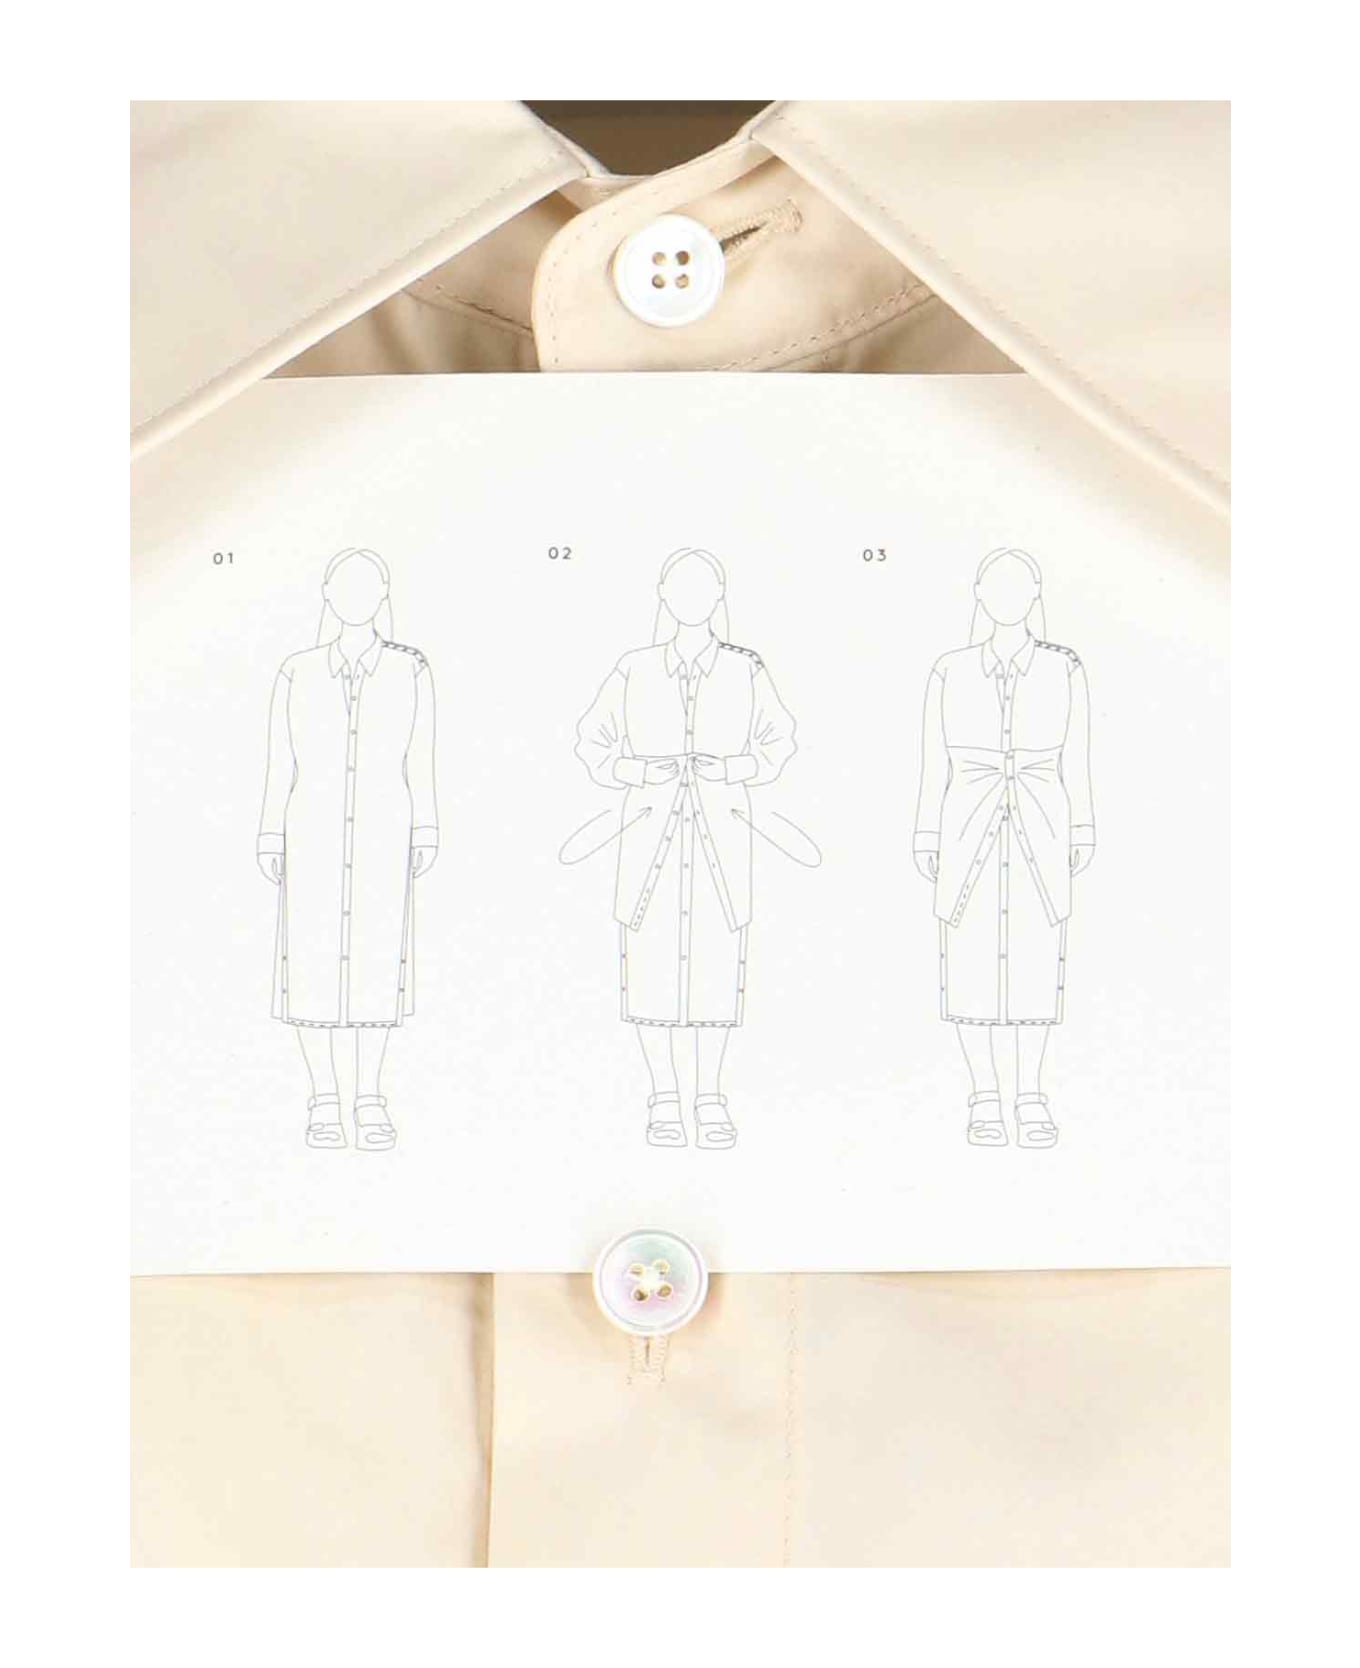 Lemaire "playful Buttoned" Midi Shirt Dress - Crema